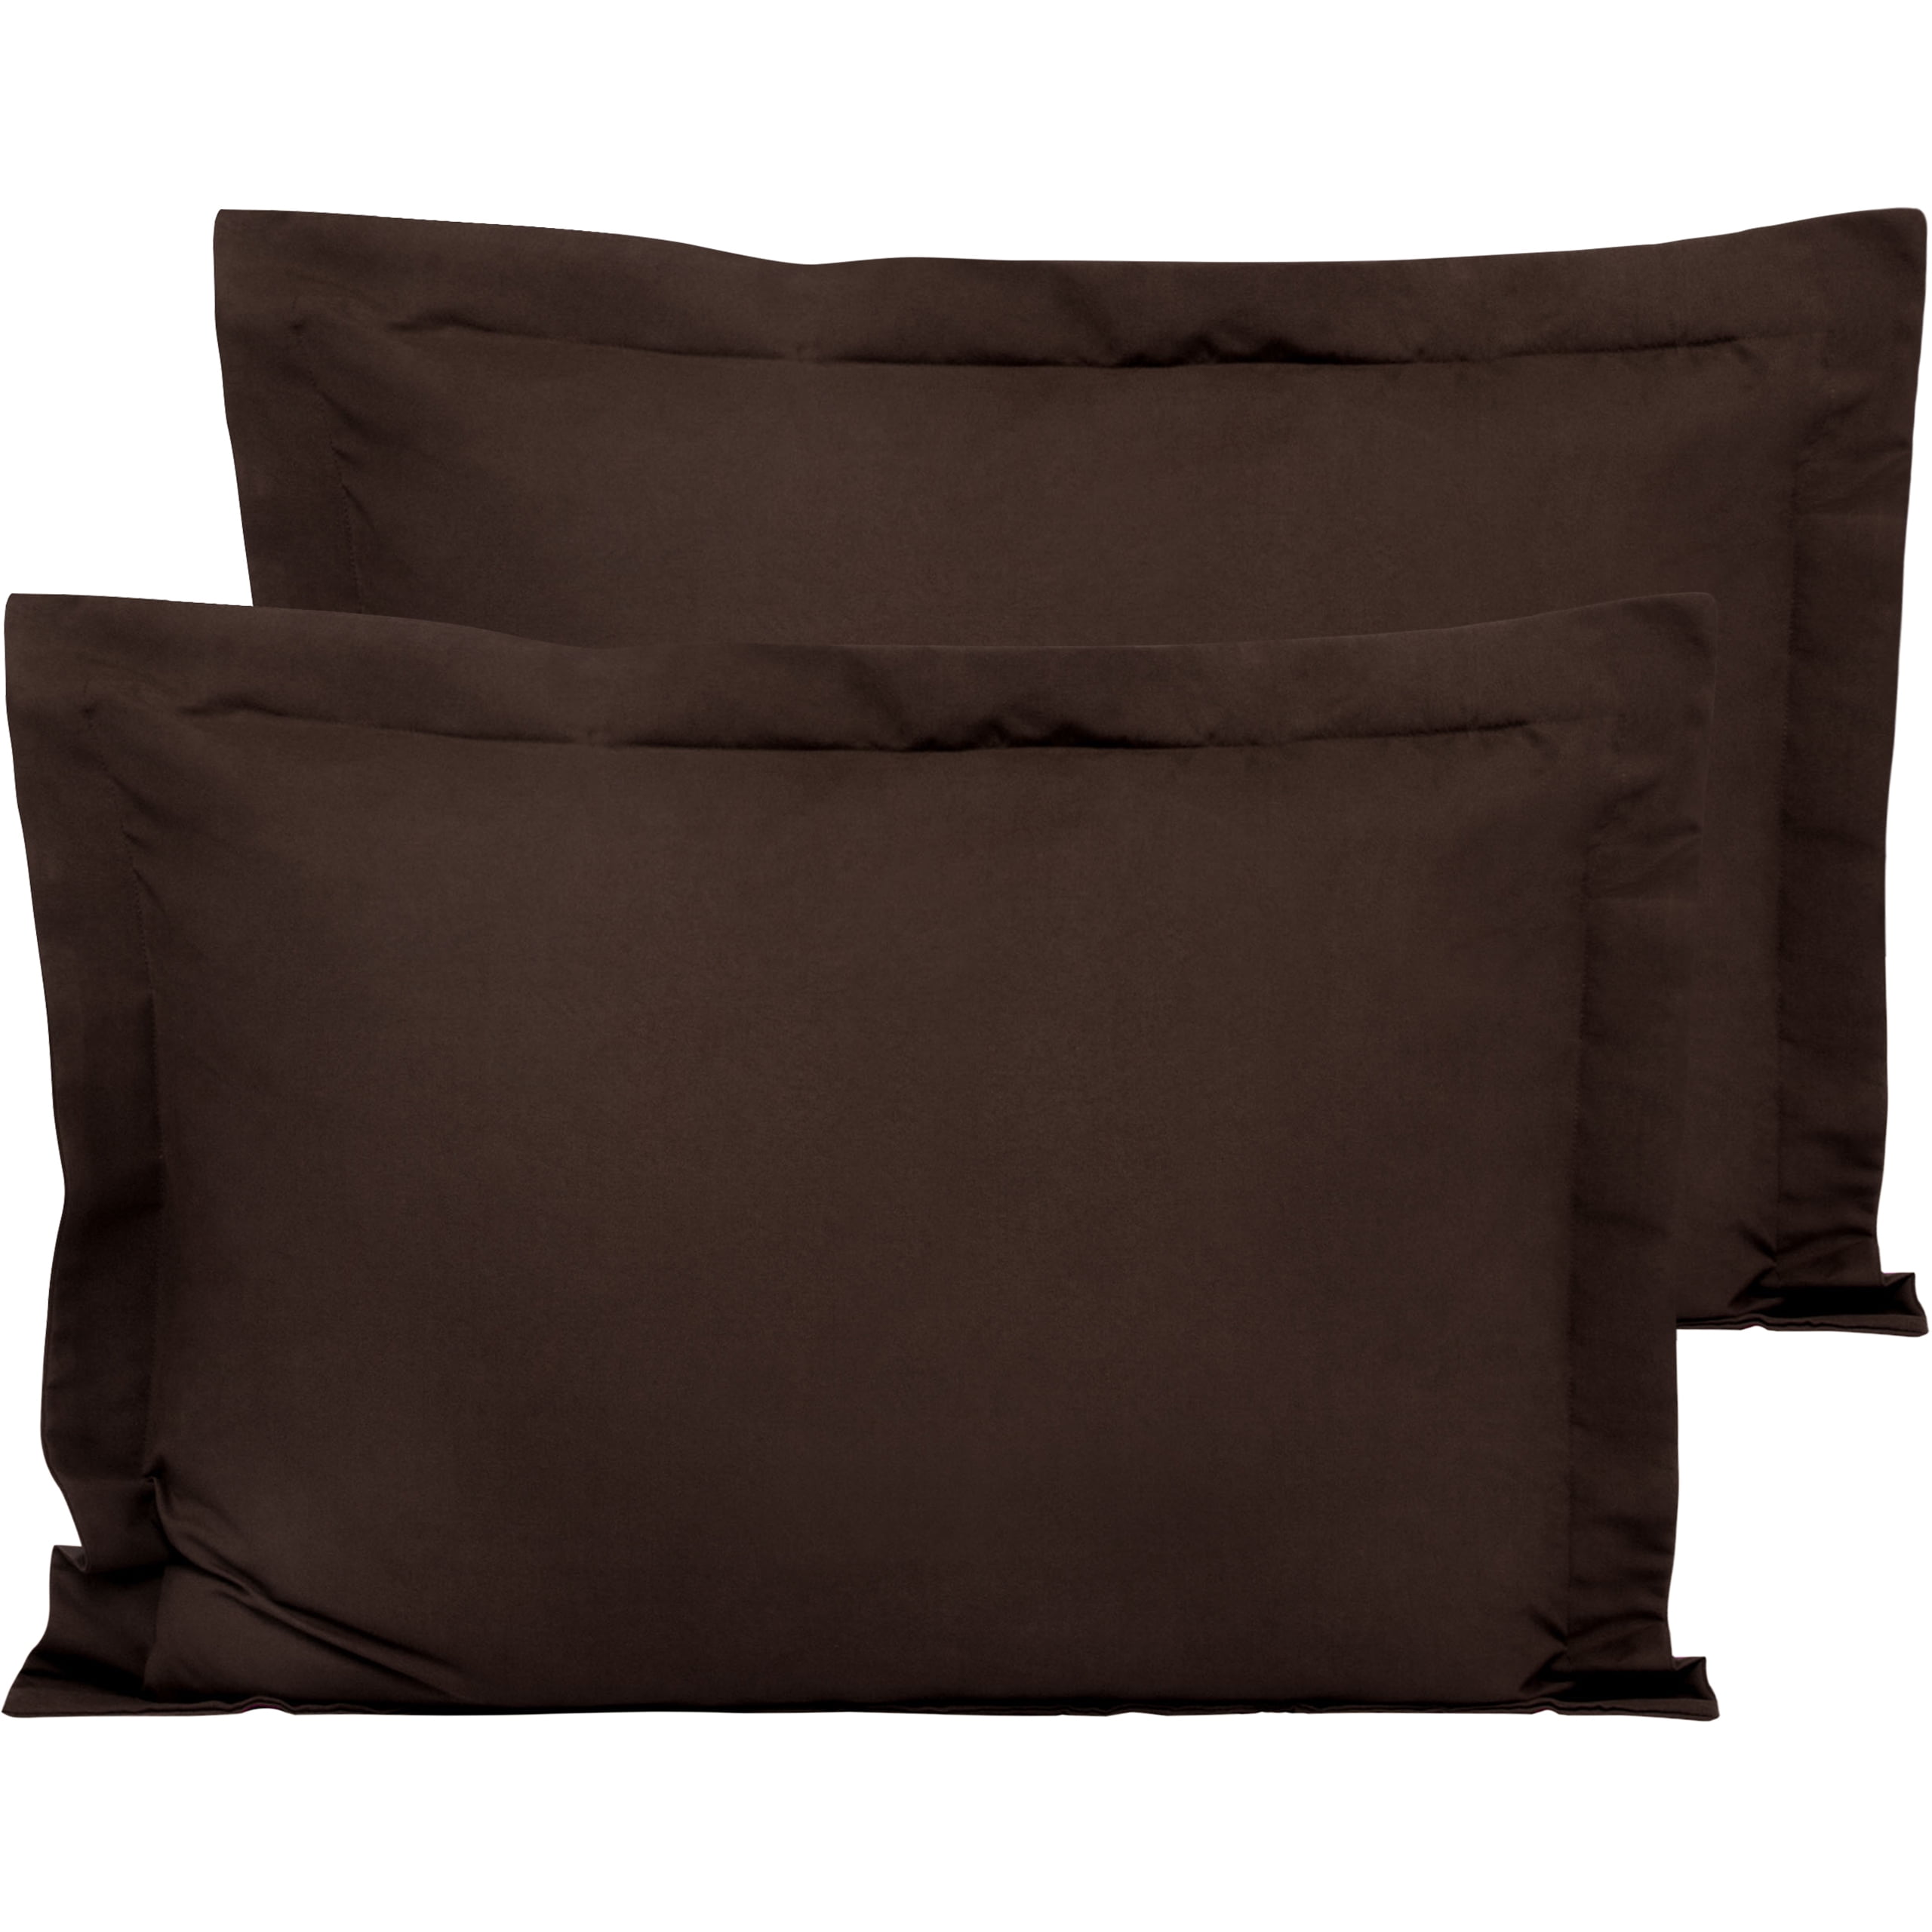 FLXXIE 2 Pack Microfiber Pillow Shams 20 x 26 Orange, Standard Ultra Soft and Premium Quality 